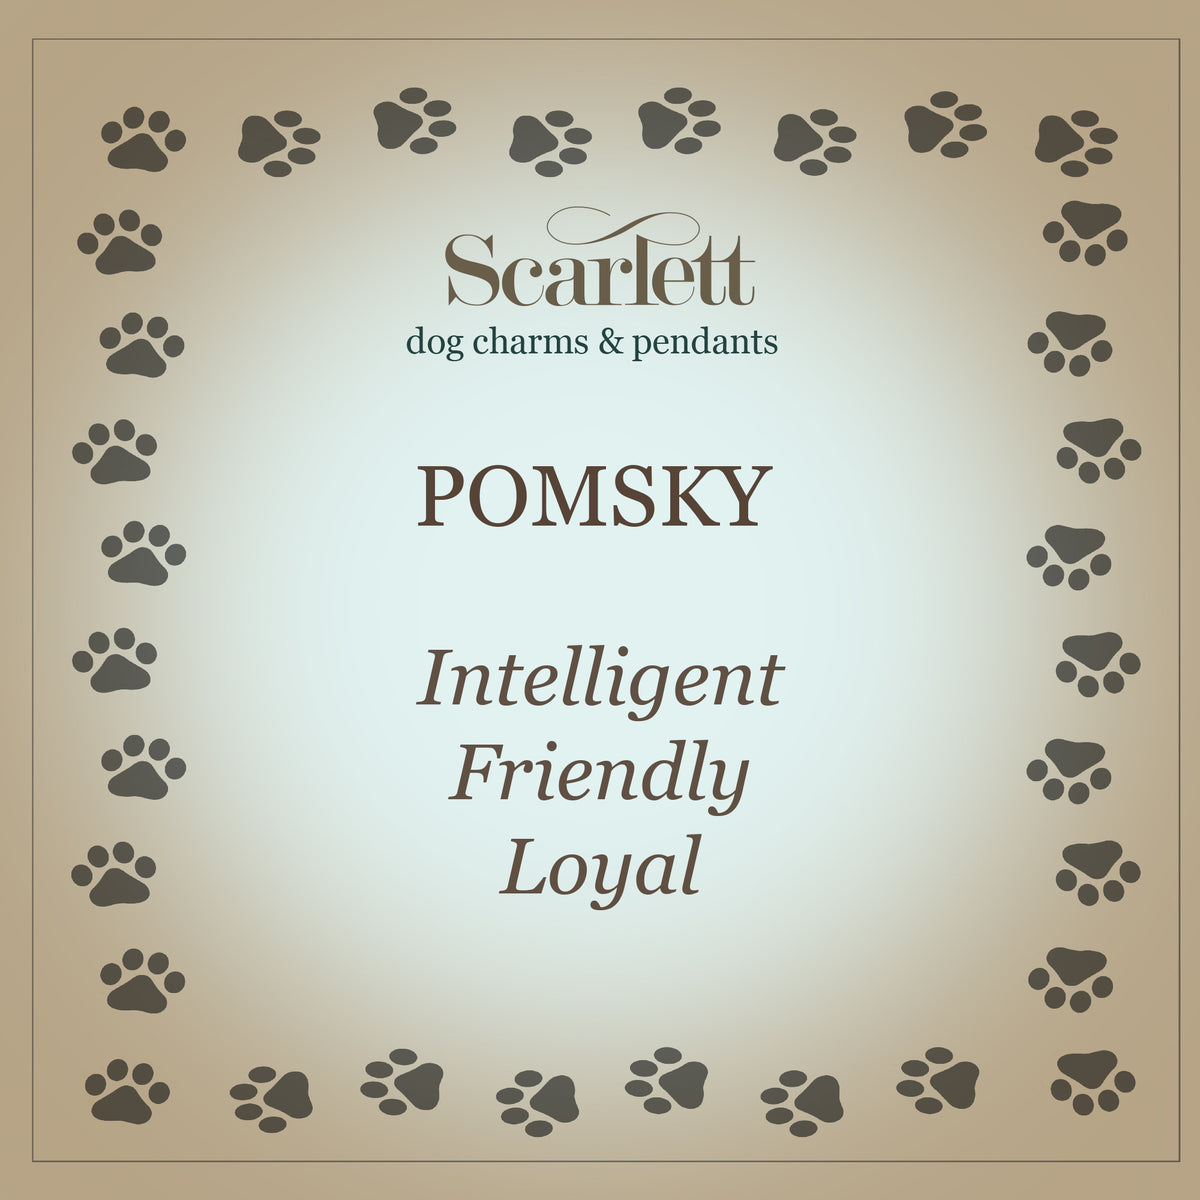 Pomsky Solid Gold Dog Charm